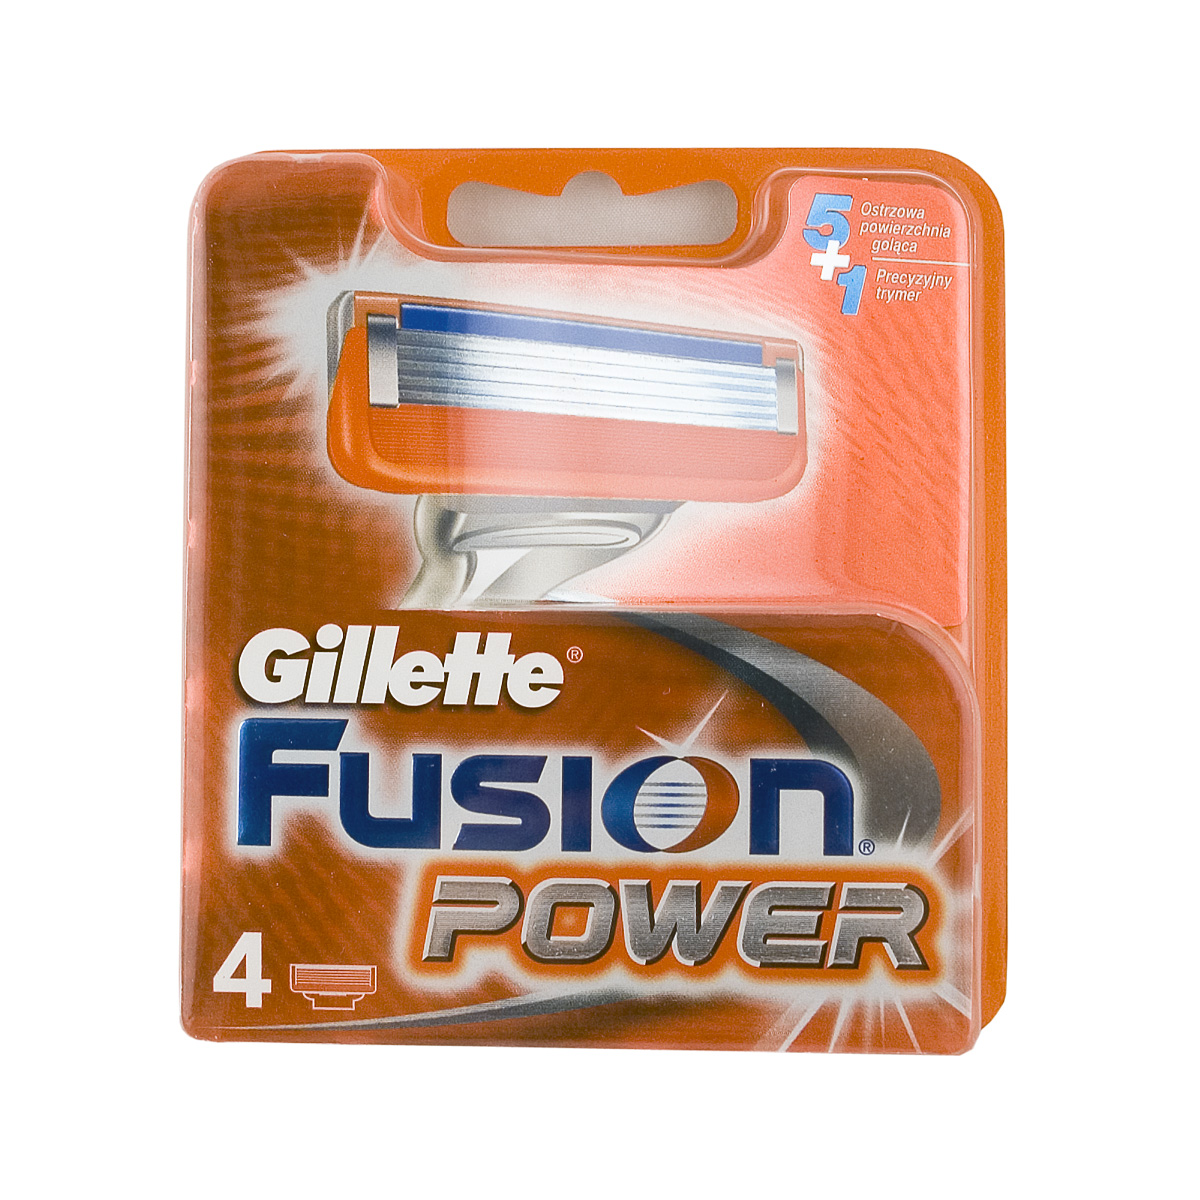 Gillette Fusion Power 4pcs skustuvo galvutė